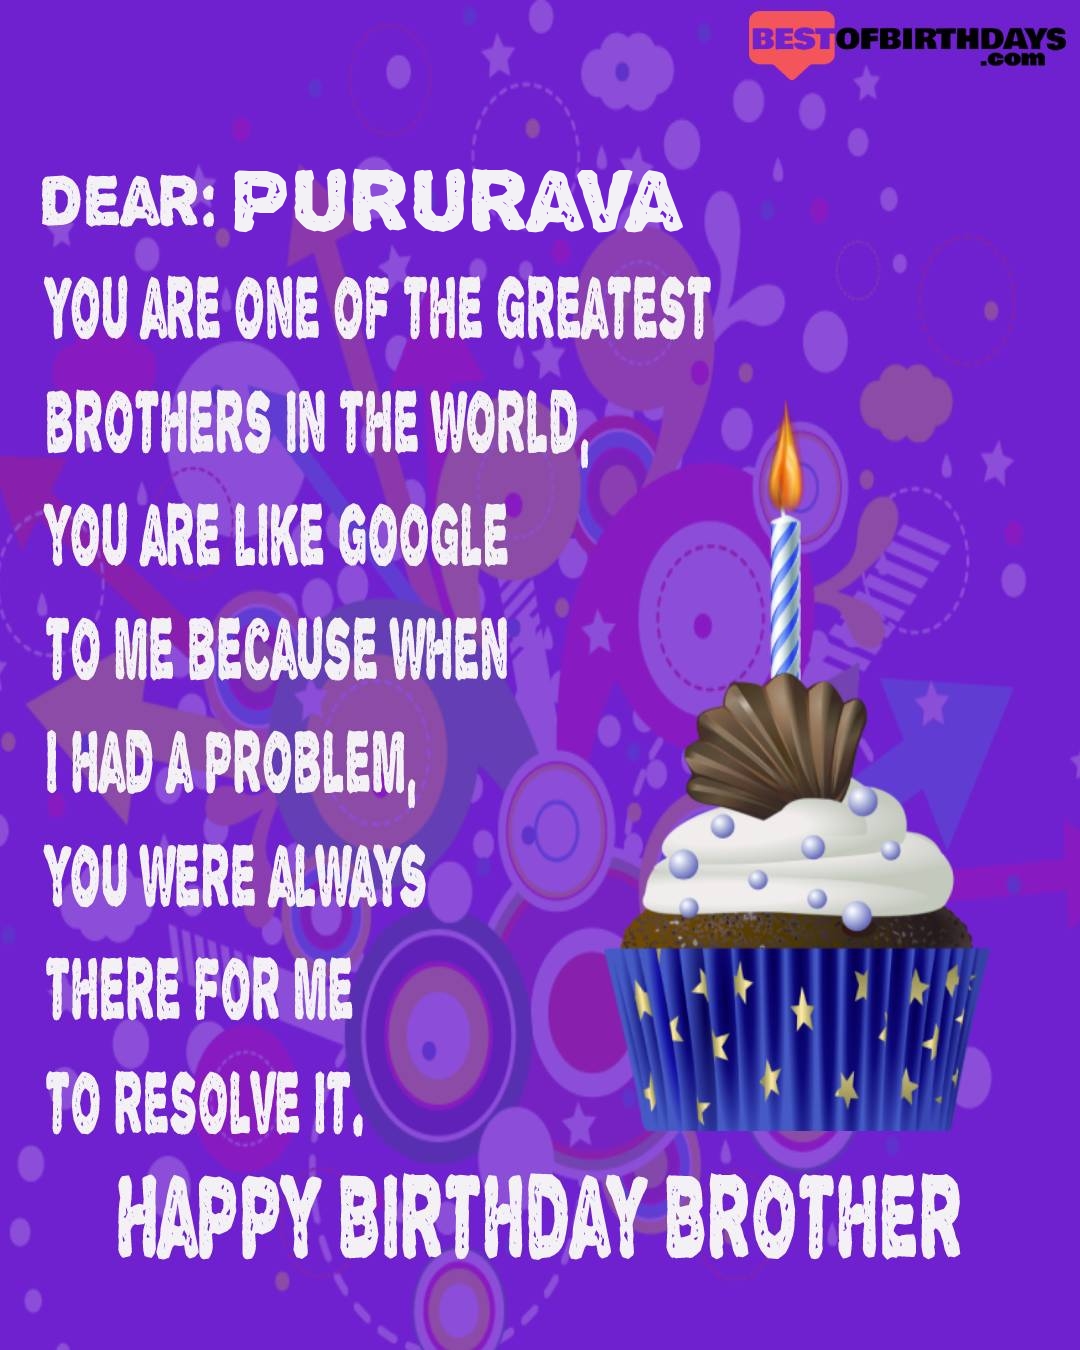 Happy birthday pururava bhai brother bro